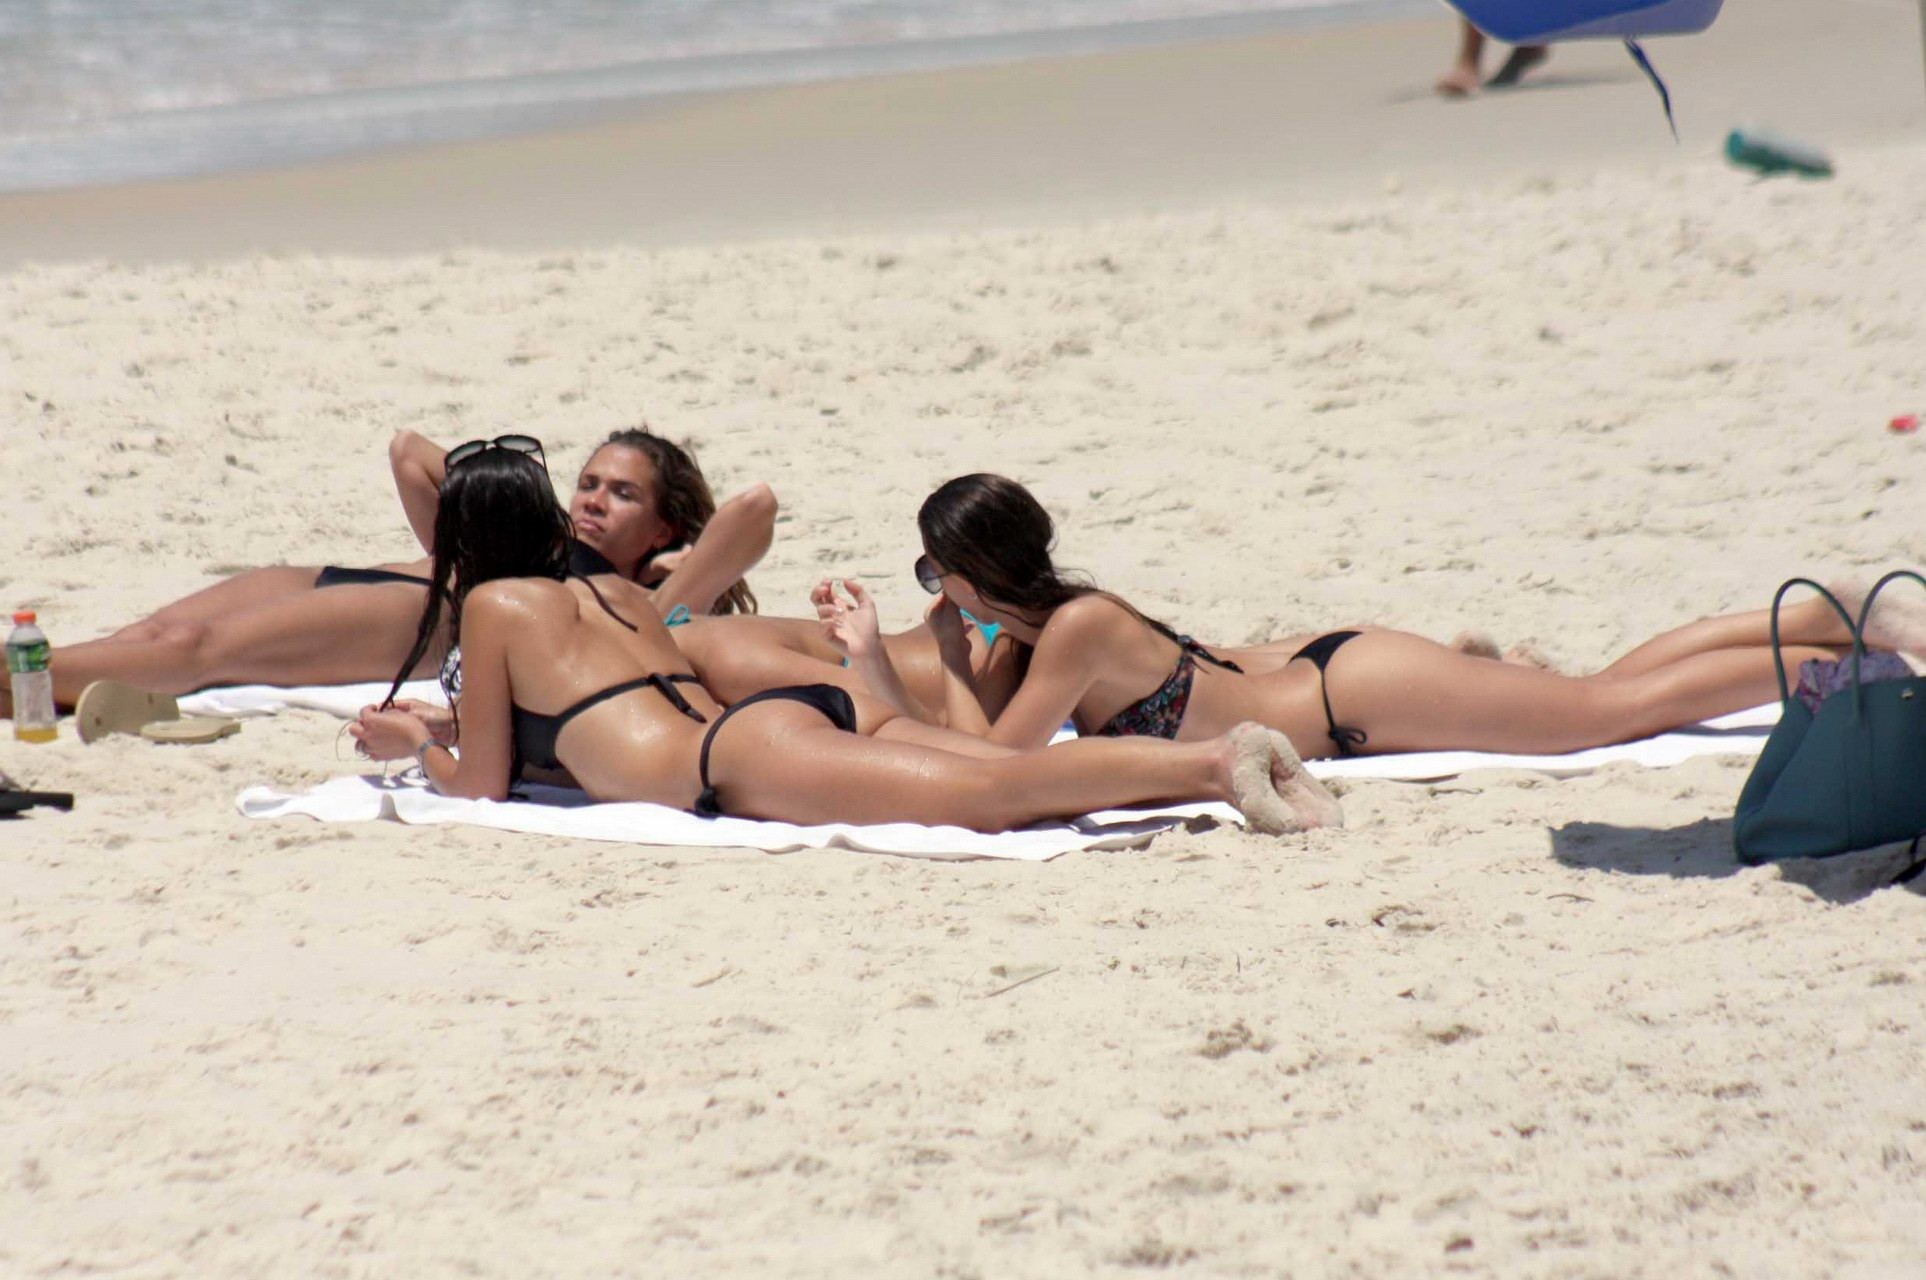 Jordana brewster con bikini negro sexy en la playa de rio de janeiro
 #75327349